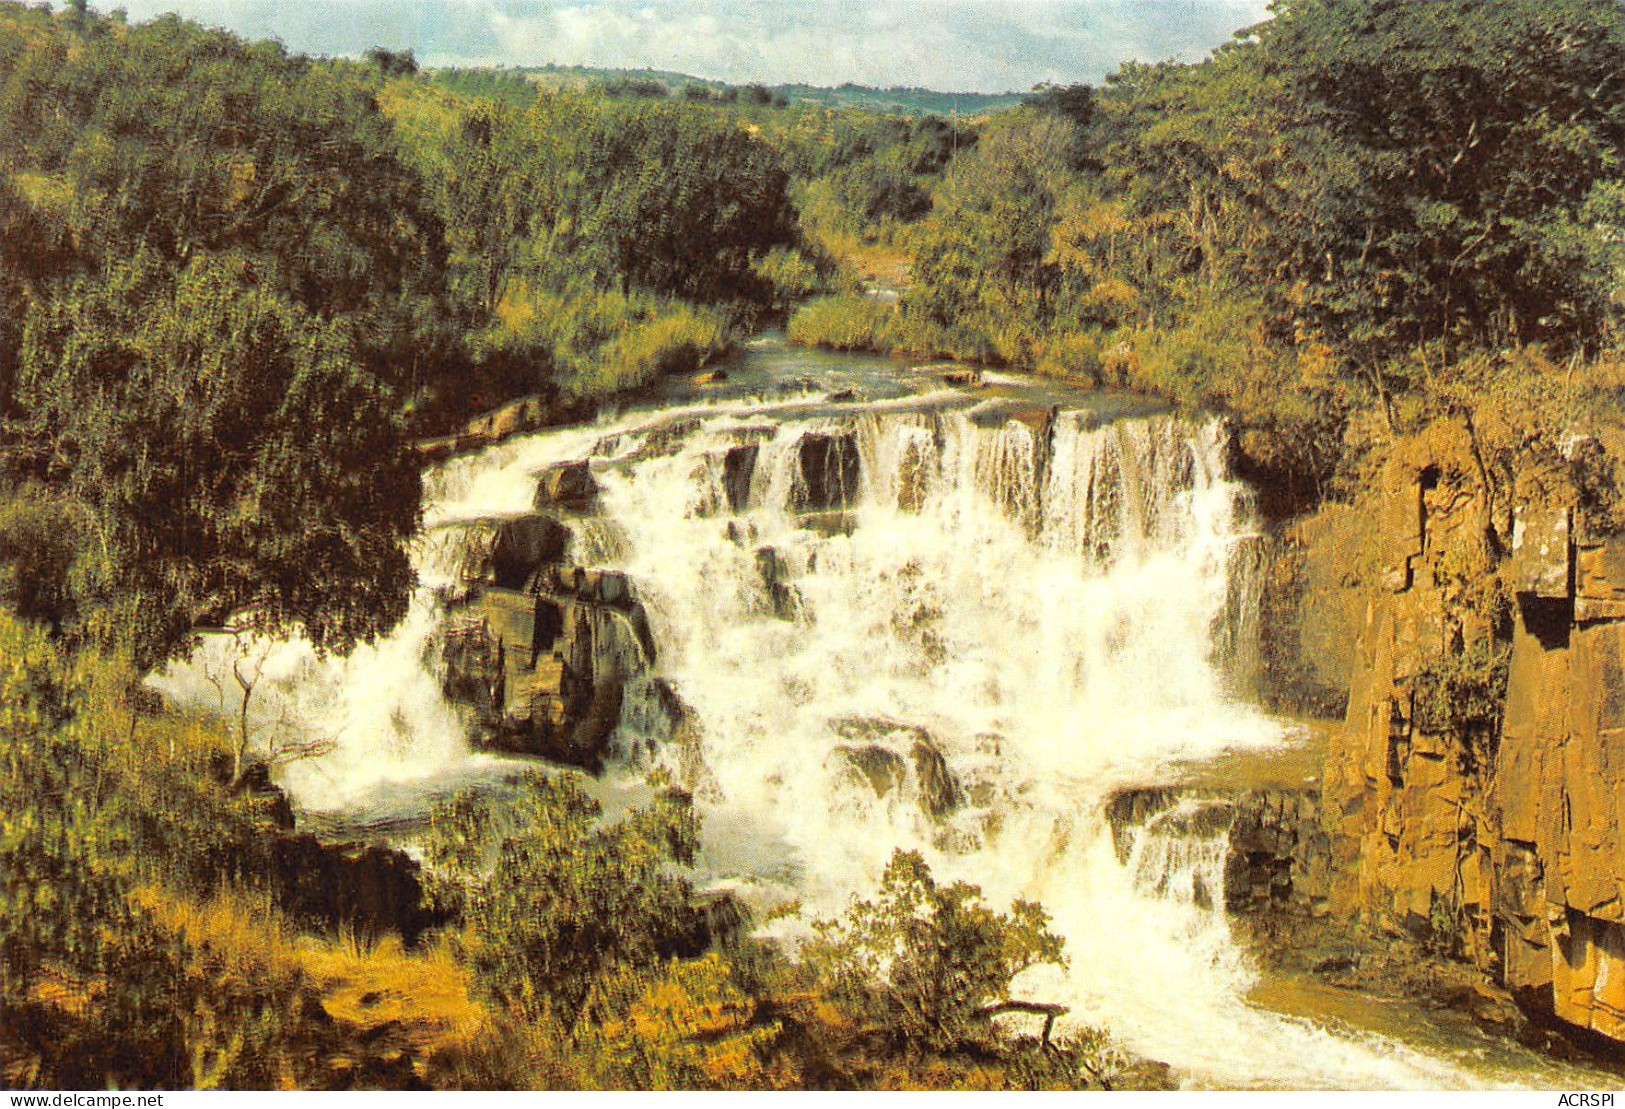 Zimbabwe Falls Nyangombi Nyanga - Southern Rhodesia Publisher PVT HARARE (Scan R/V) N° 26 \MP7117 - Zimbabwe